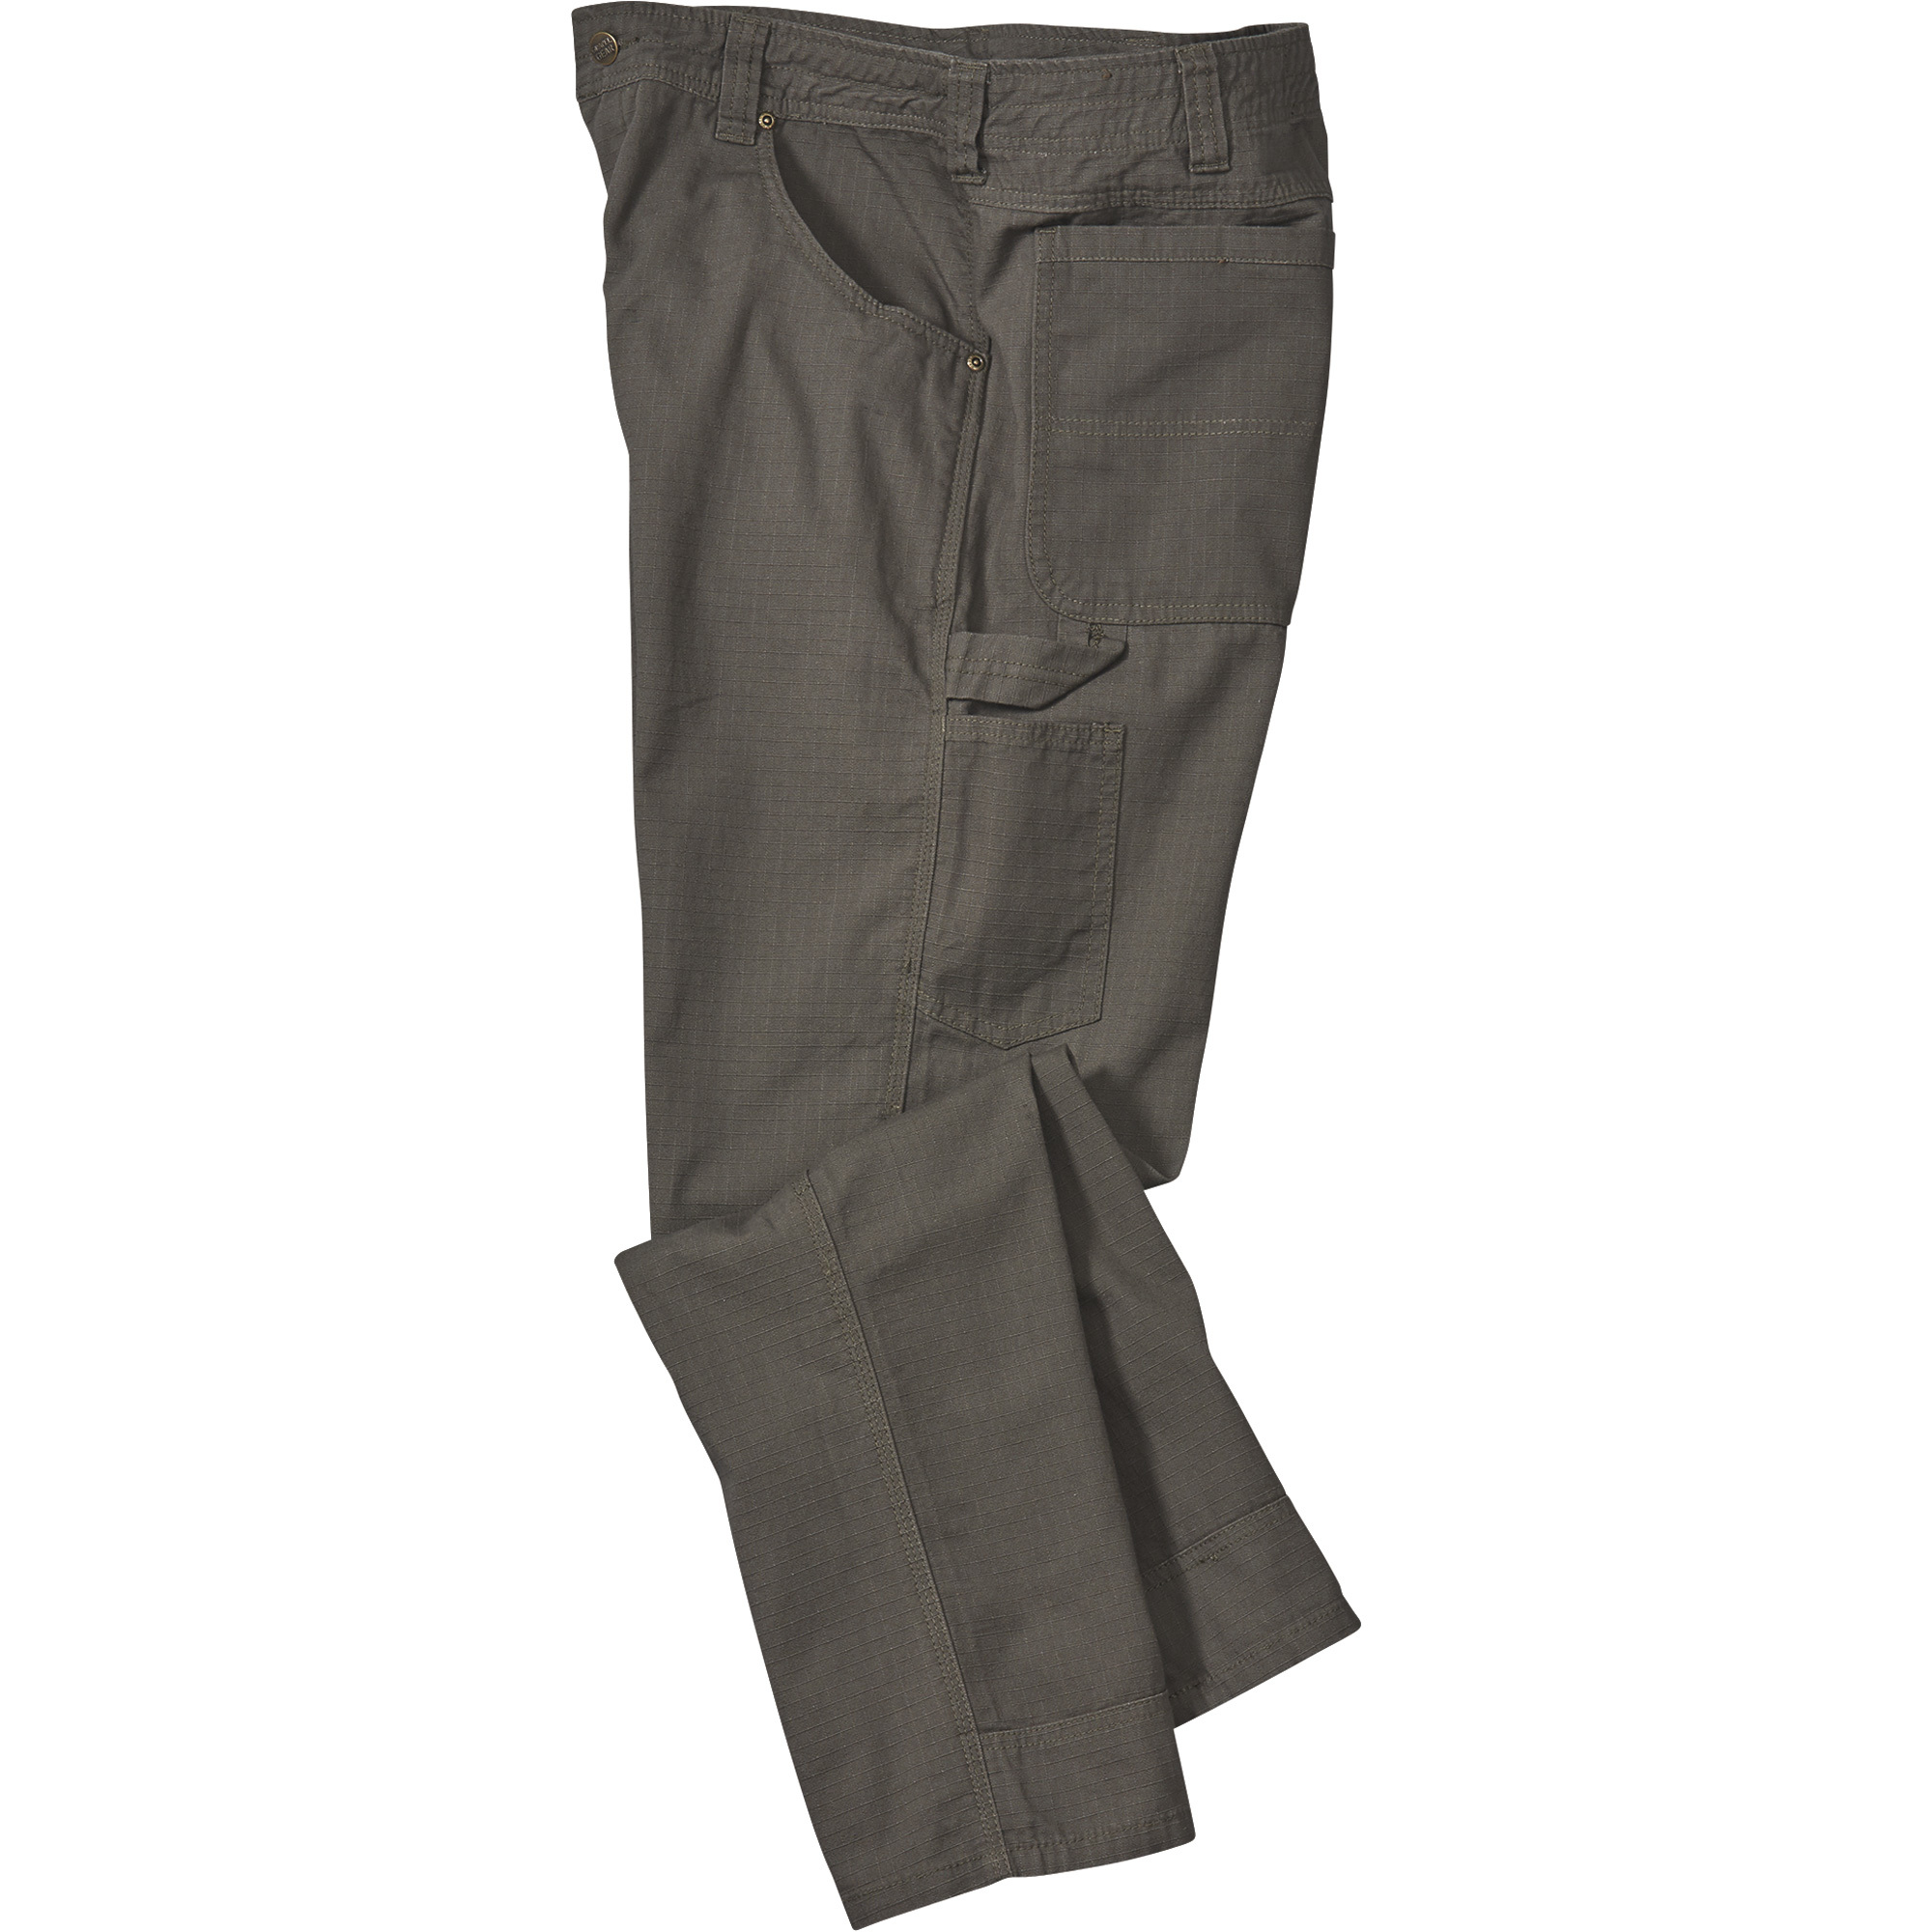 Gravel Gear Men's Cotton Ripstop Carpenter Pants with Teflon Fabric Protector â Moss, 32Inch Waist x 32Inch Inseam